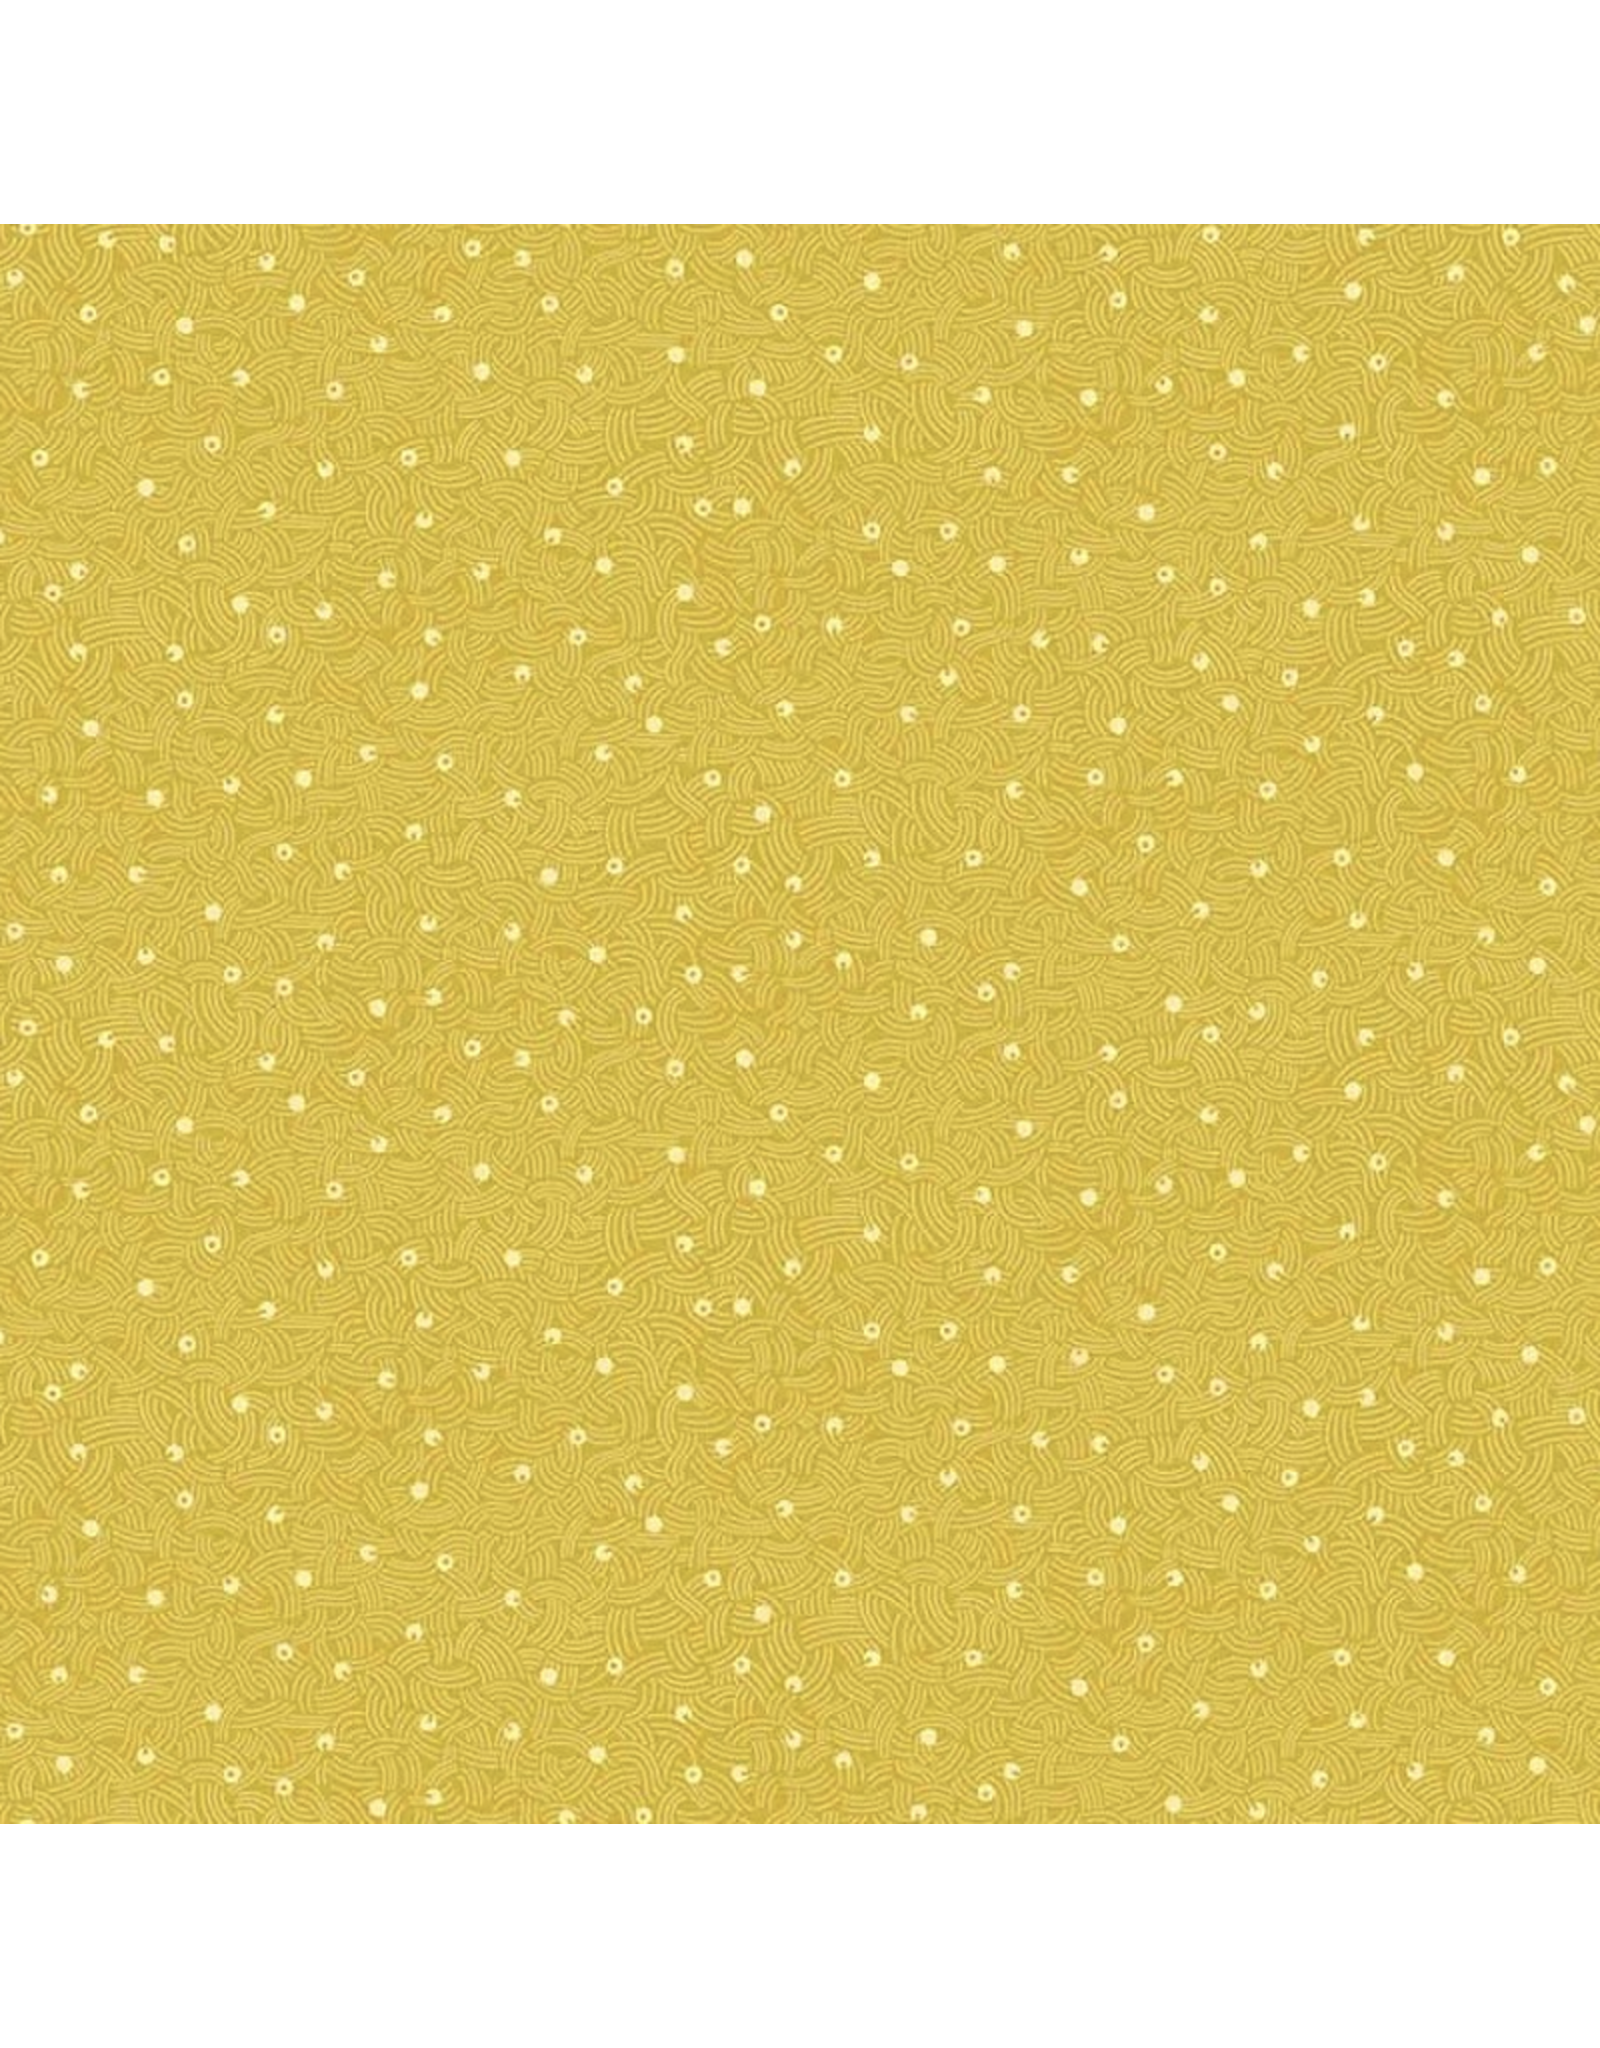 Figo Elements, Air in Mustard, Fabric Half-Yards